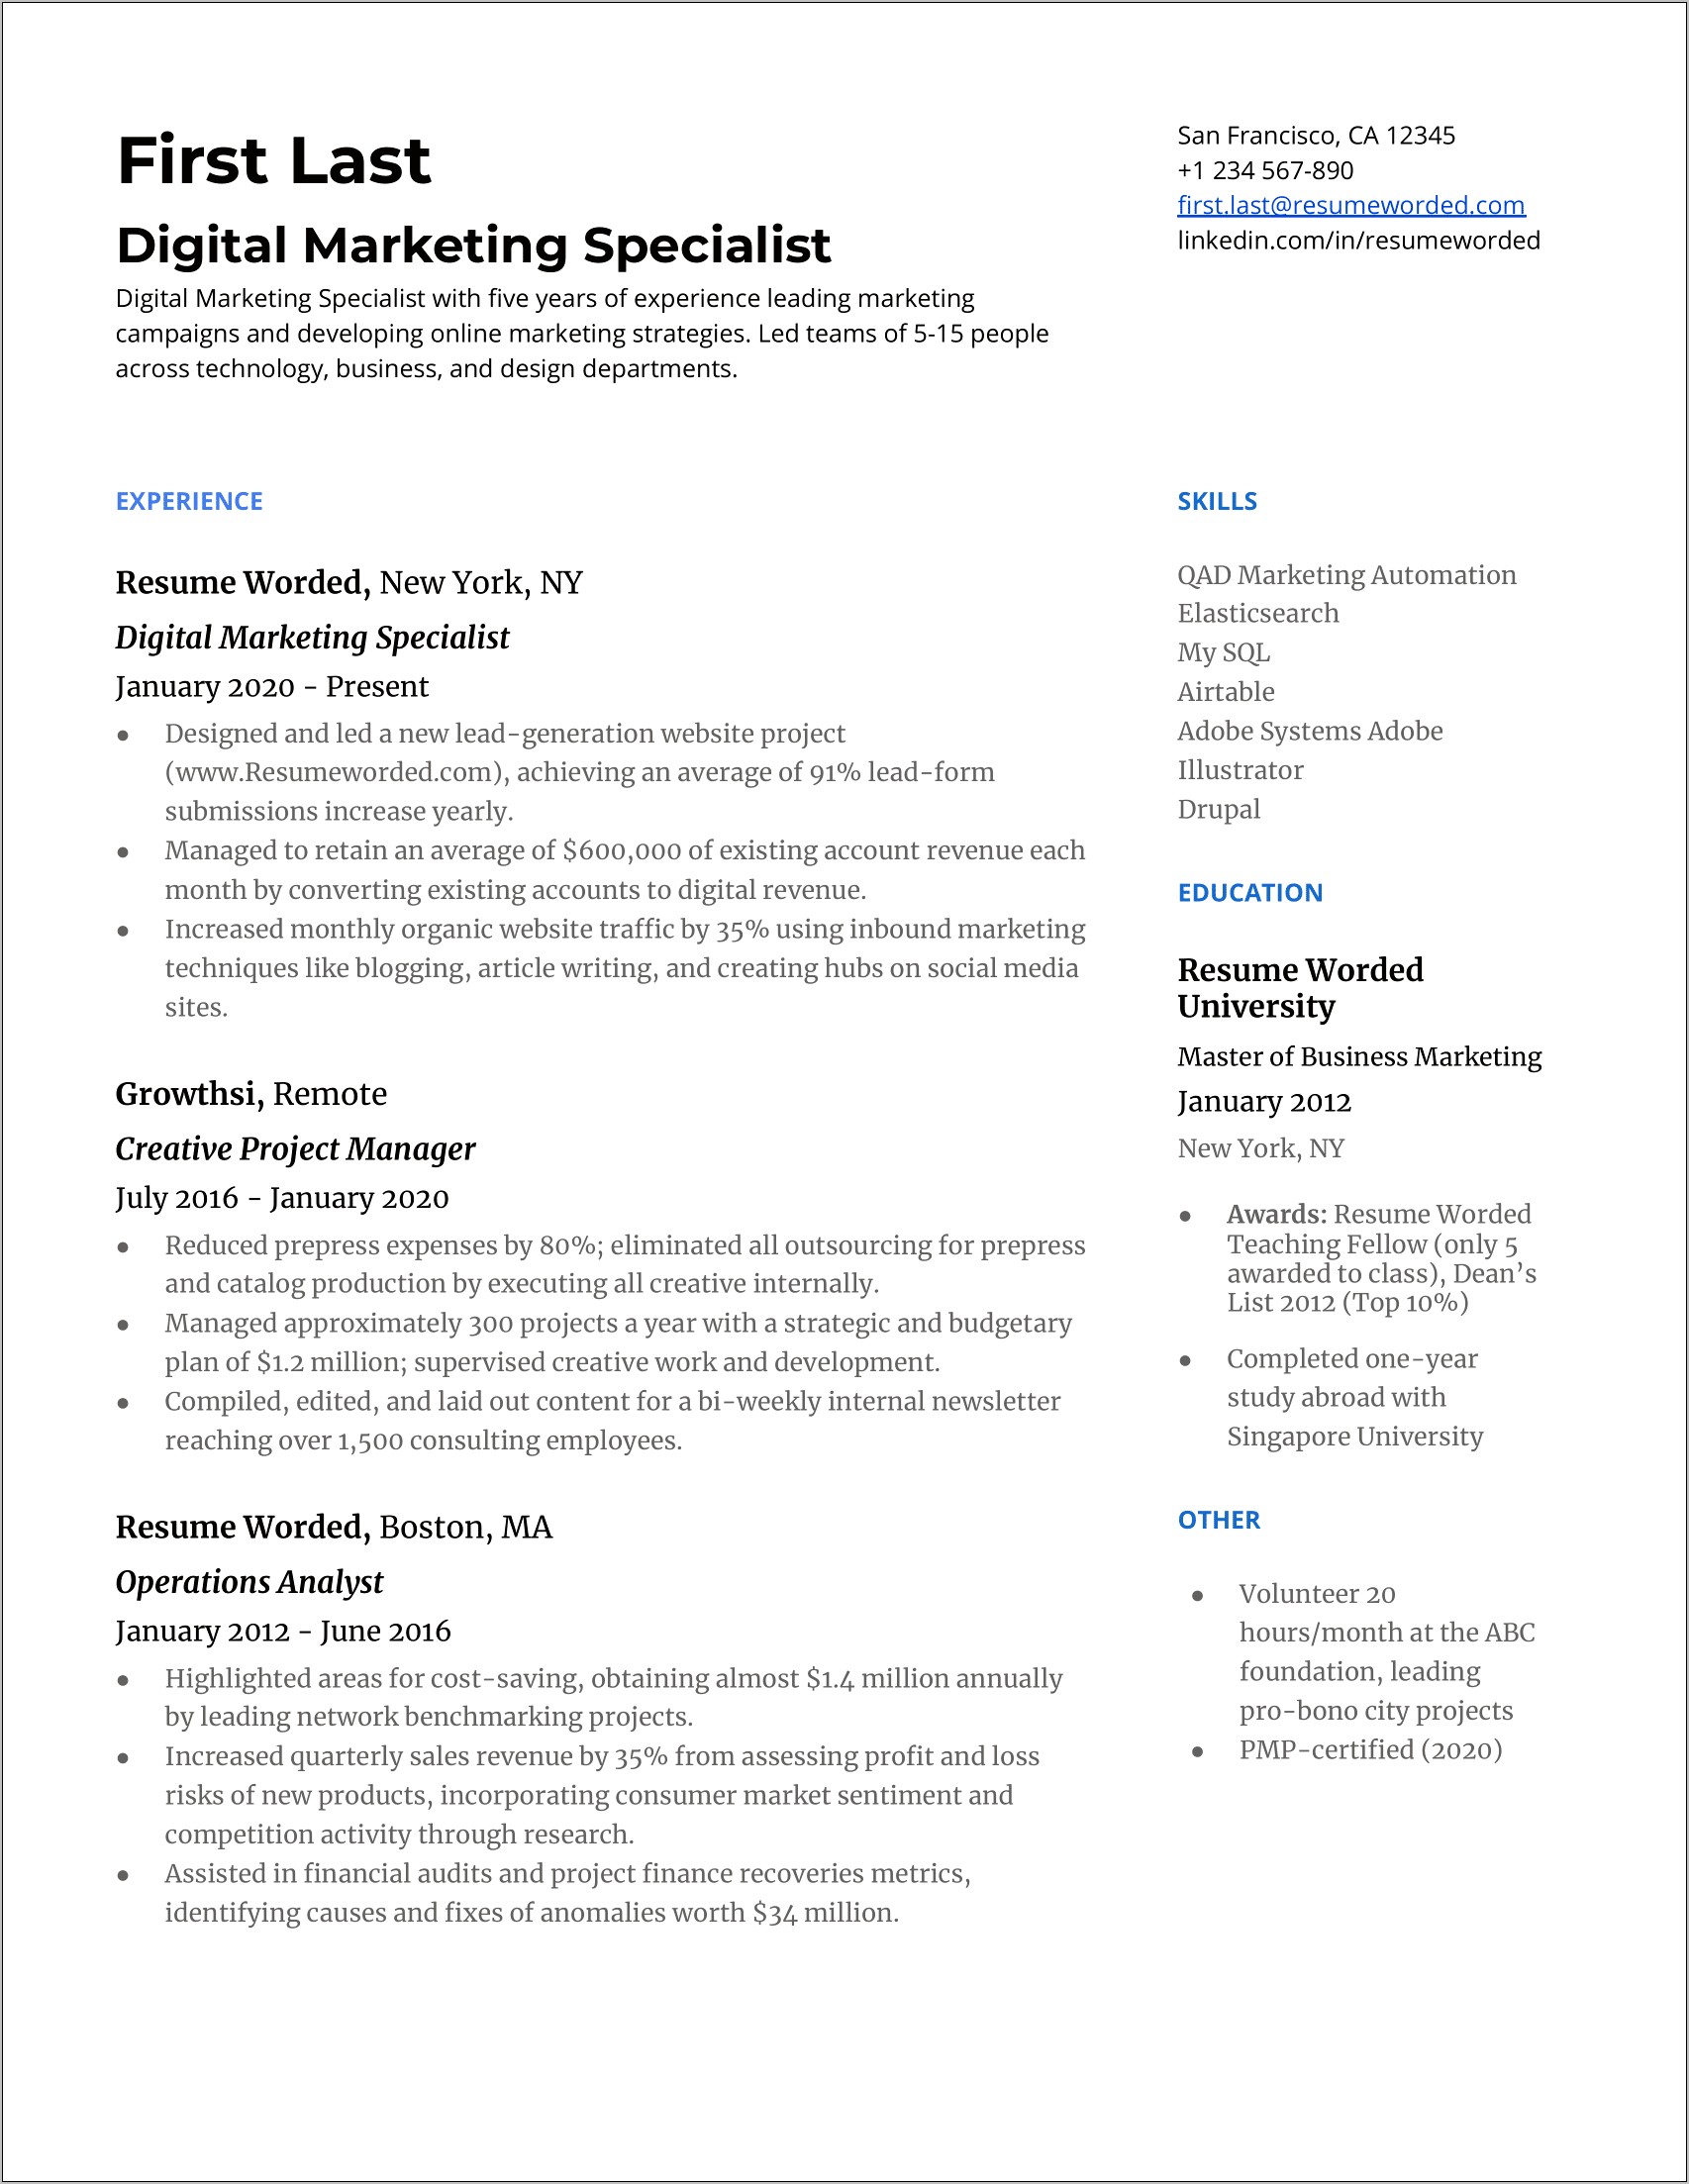 Advertising Specialist Job Description For Resume